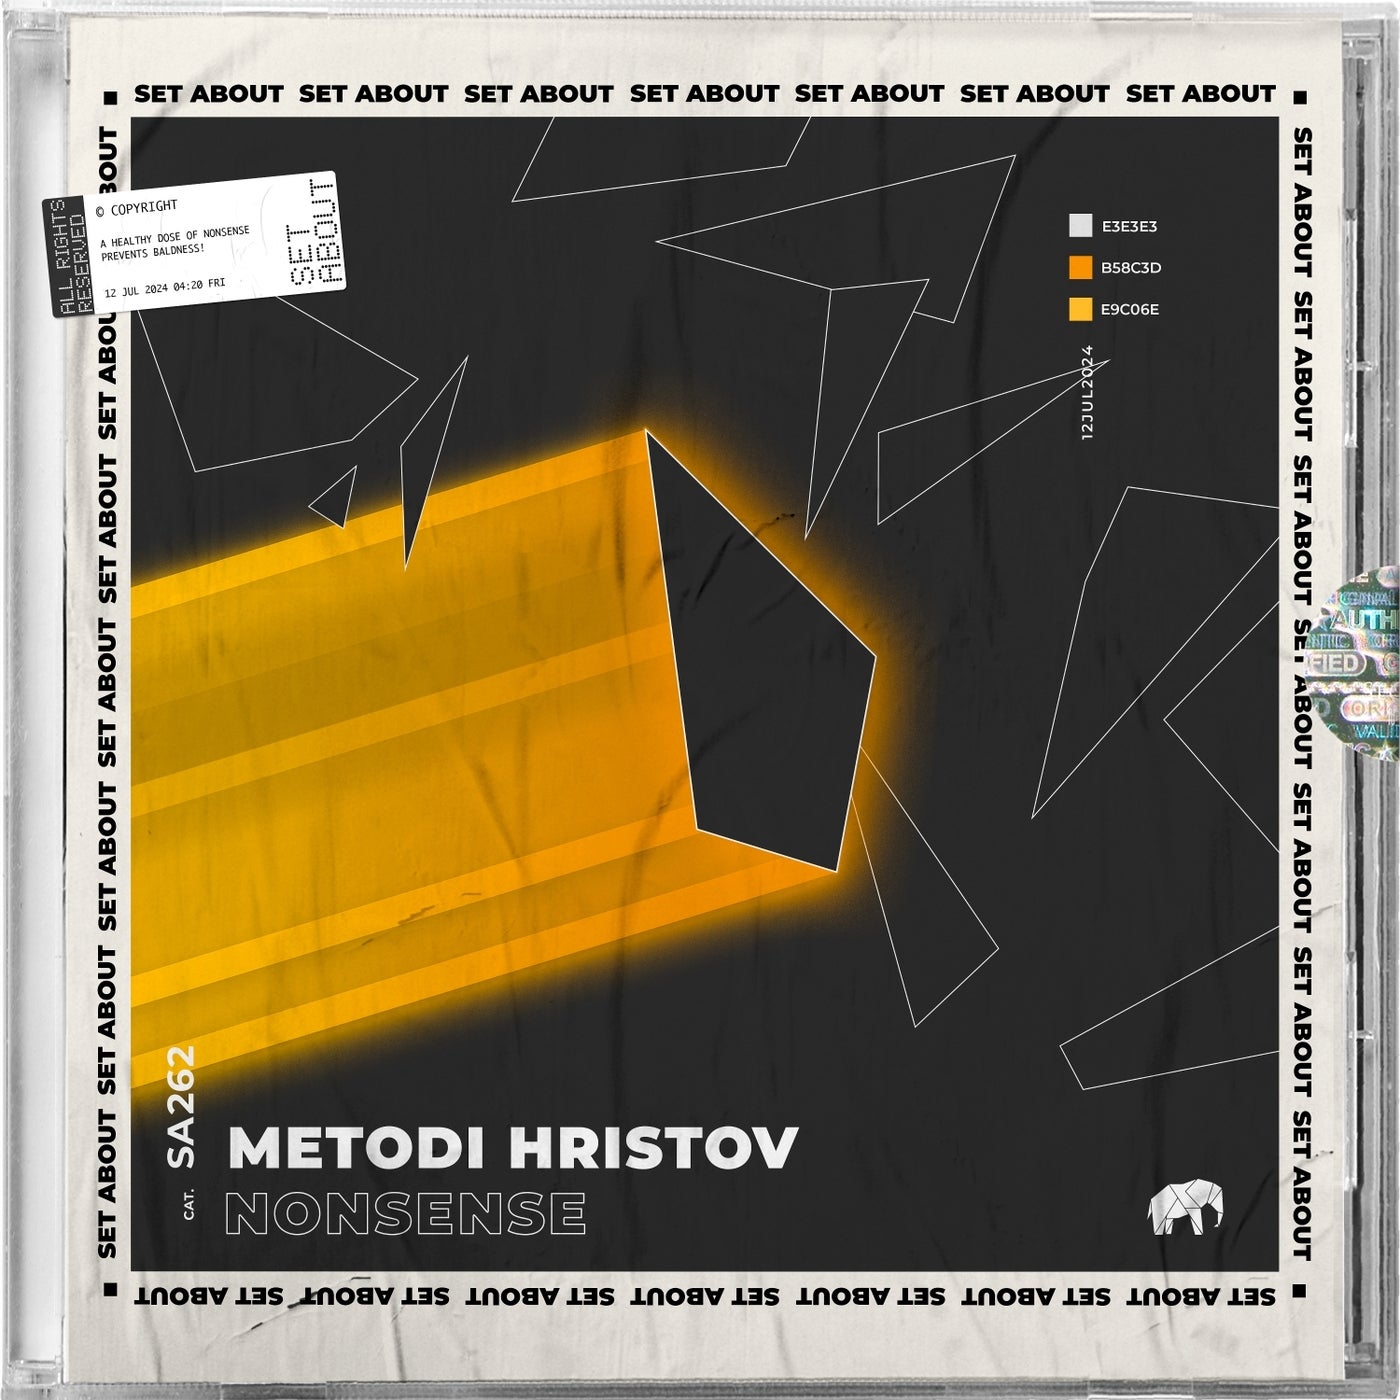 image cover: Metodi Hristov - Nonsense on Set About